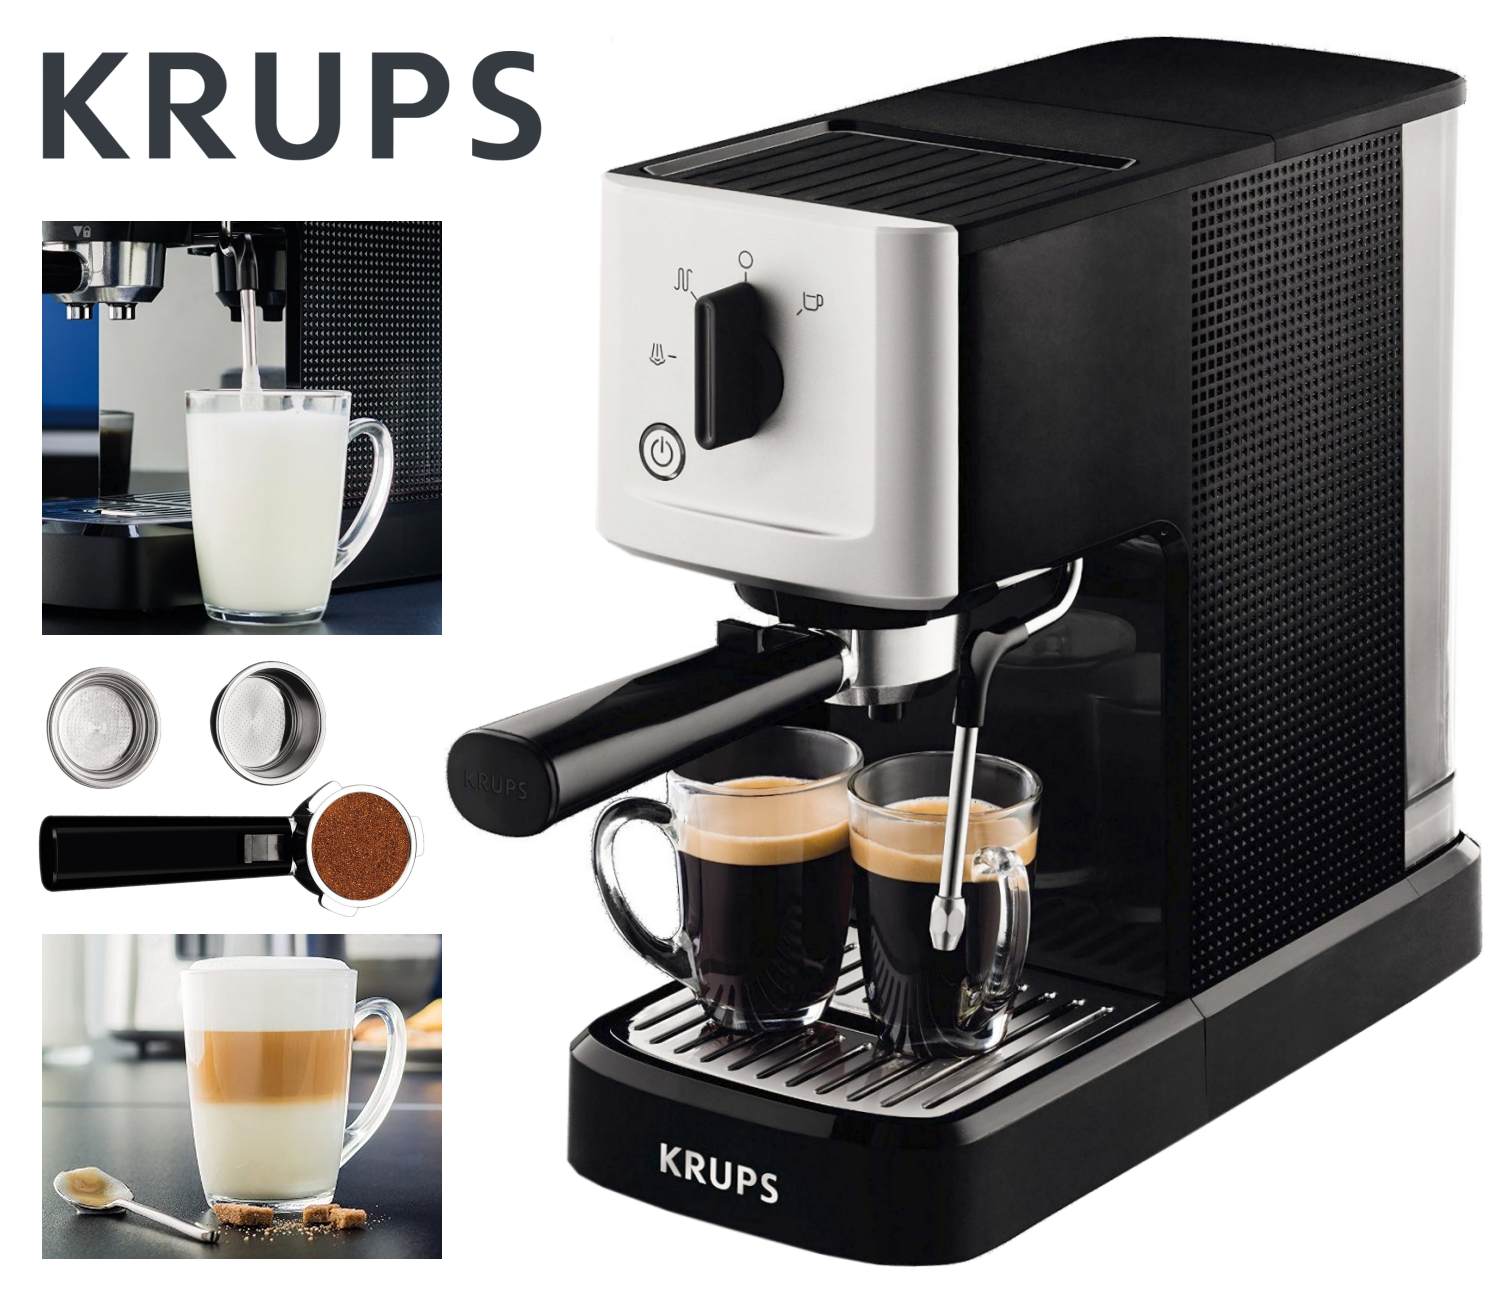 Krups XP3440 Espresso-Siebtraeger-Automat Calvi - 2. Platz Stiftung Warentest 12/2016 - Bestes Preis-Lestungsverhältnis